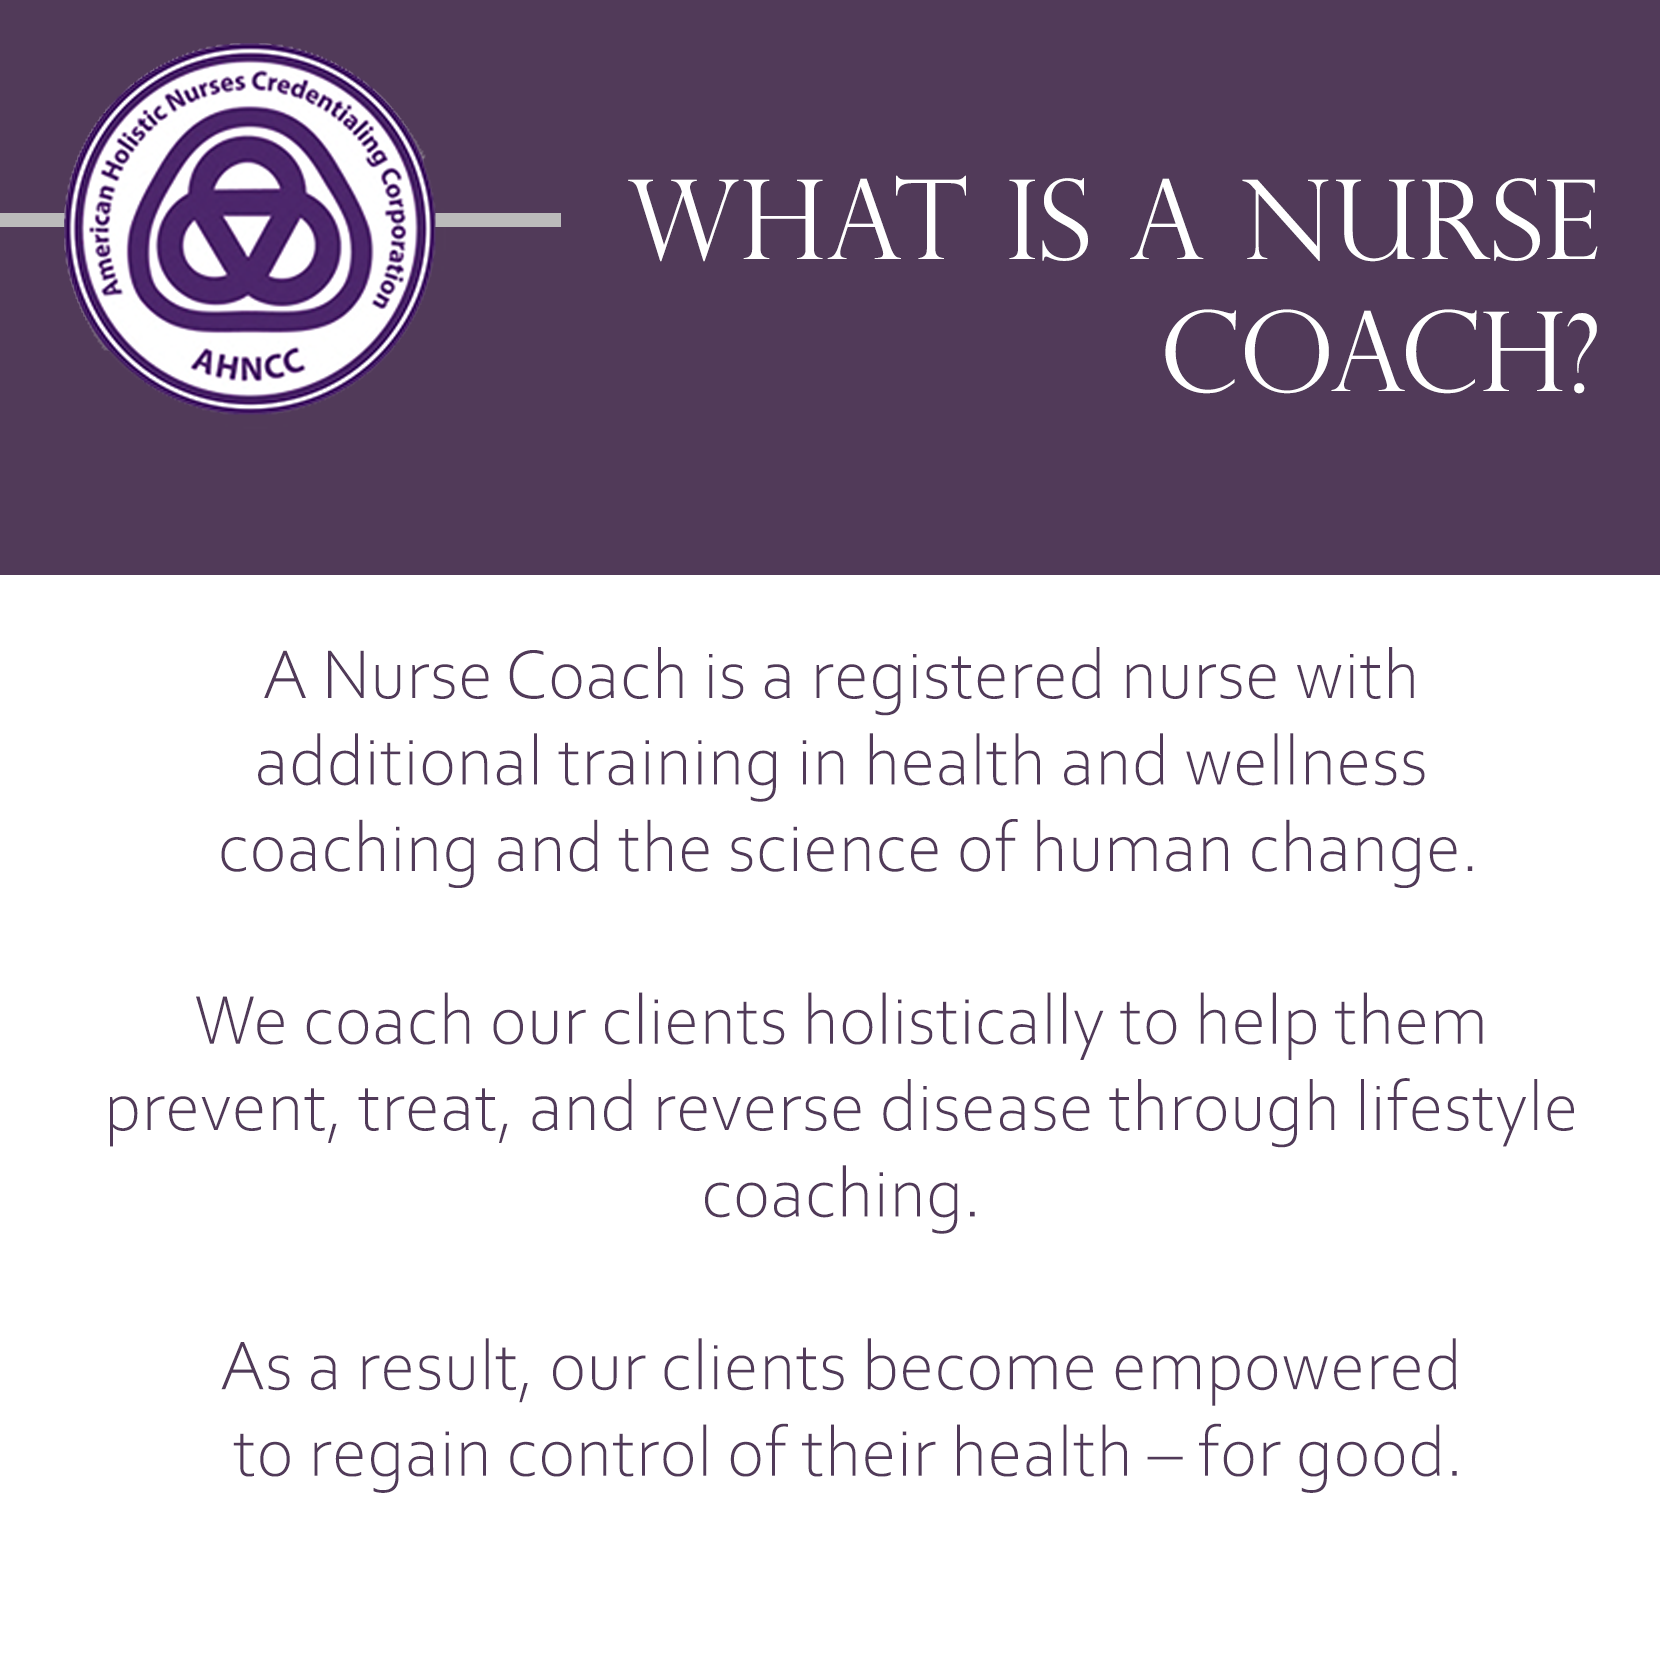 What is a Nurse Coach?